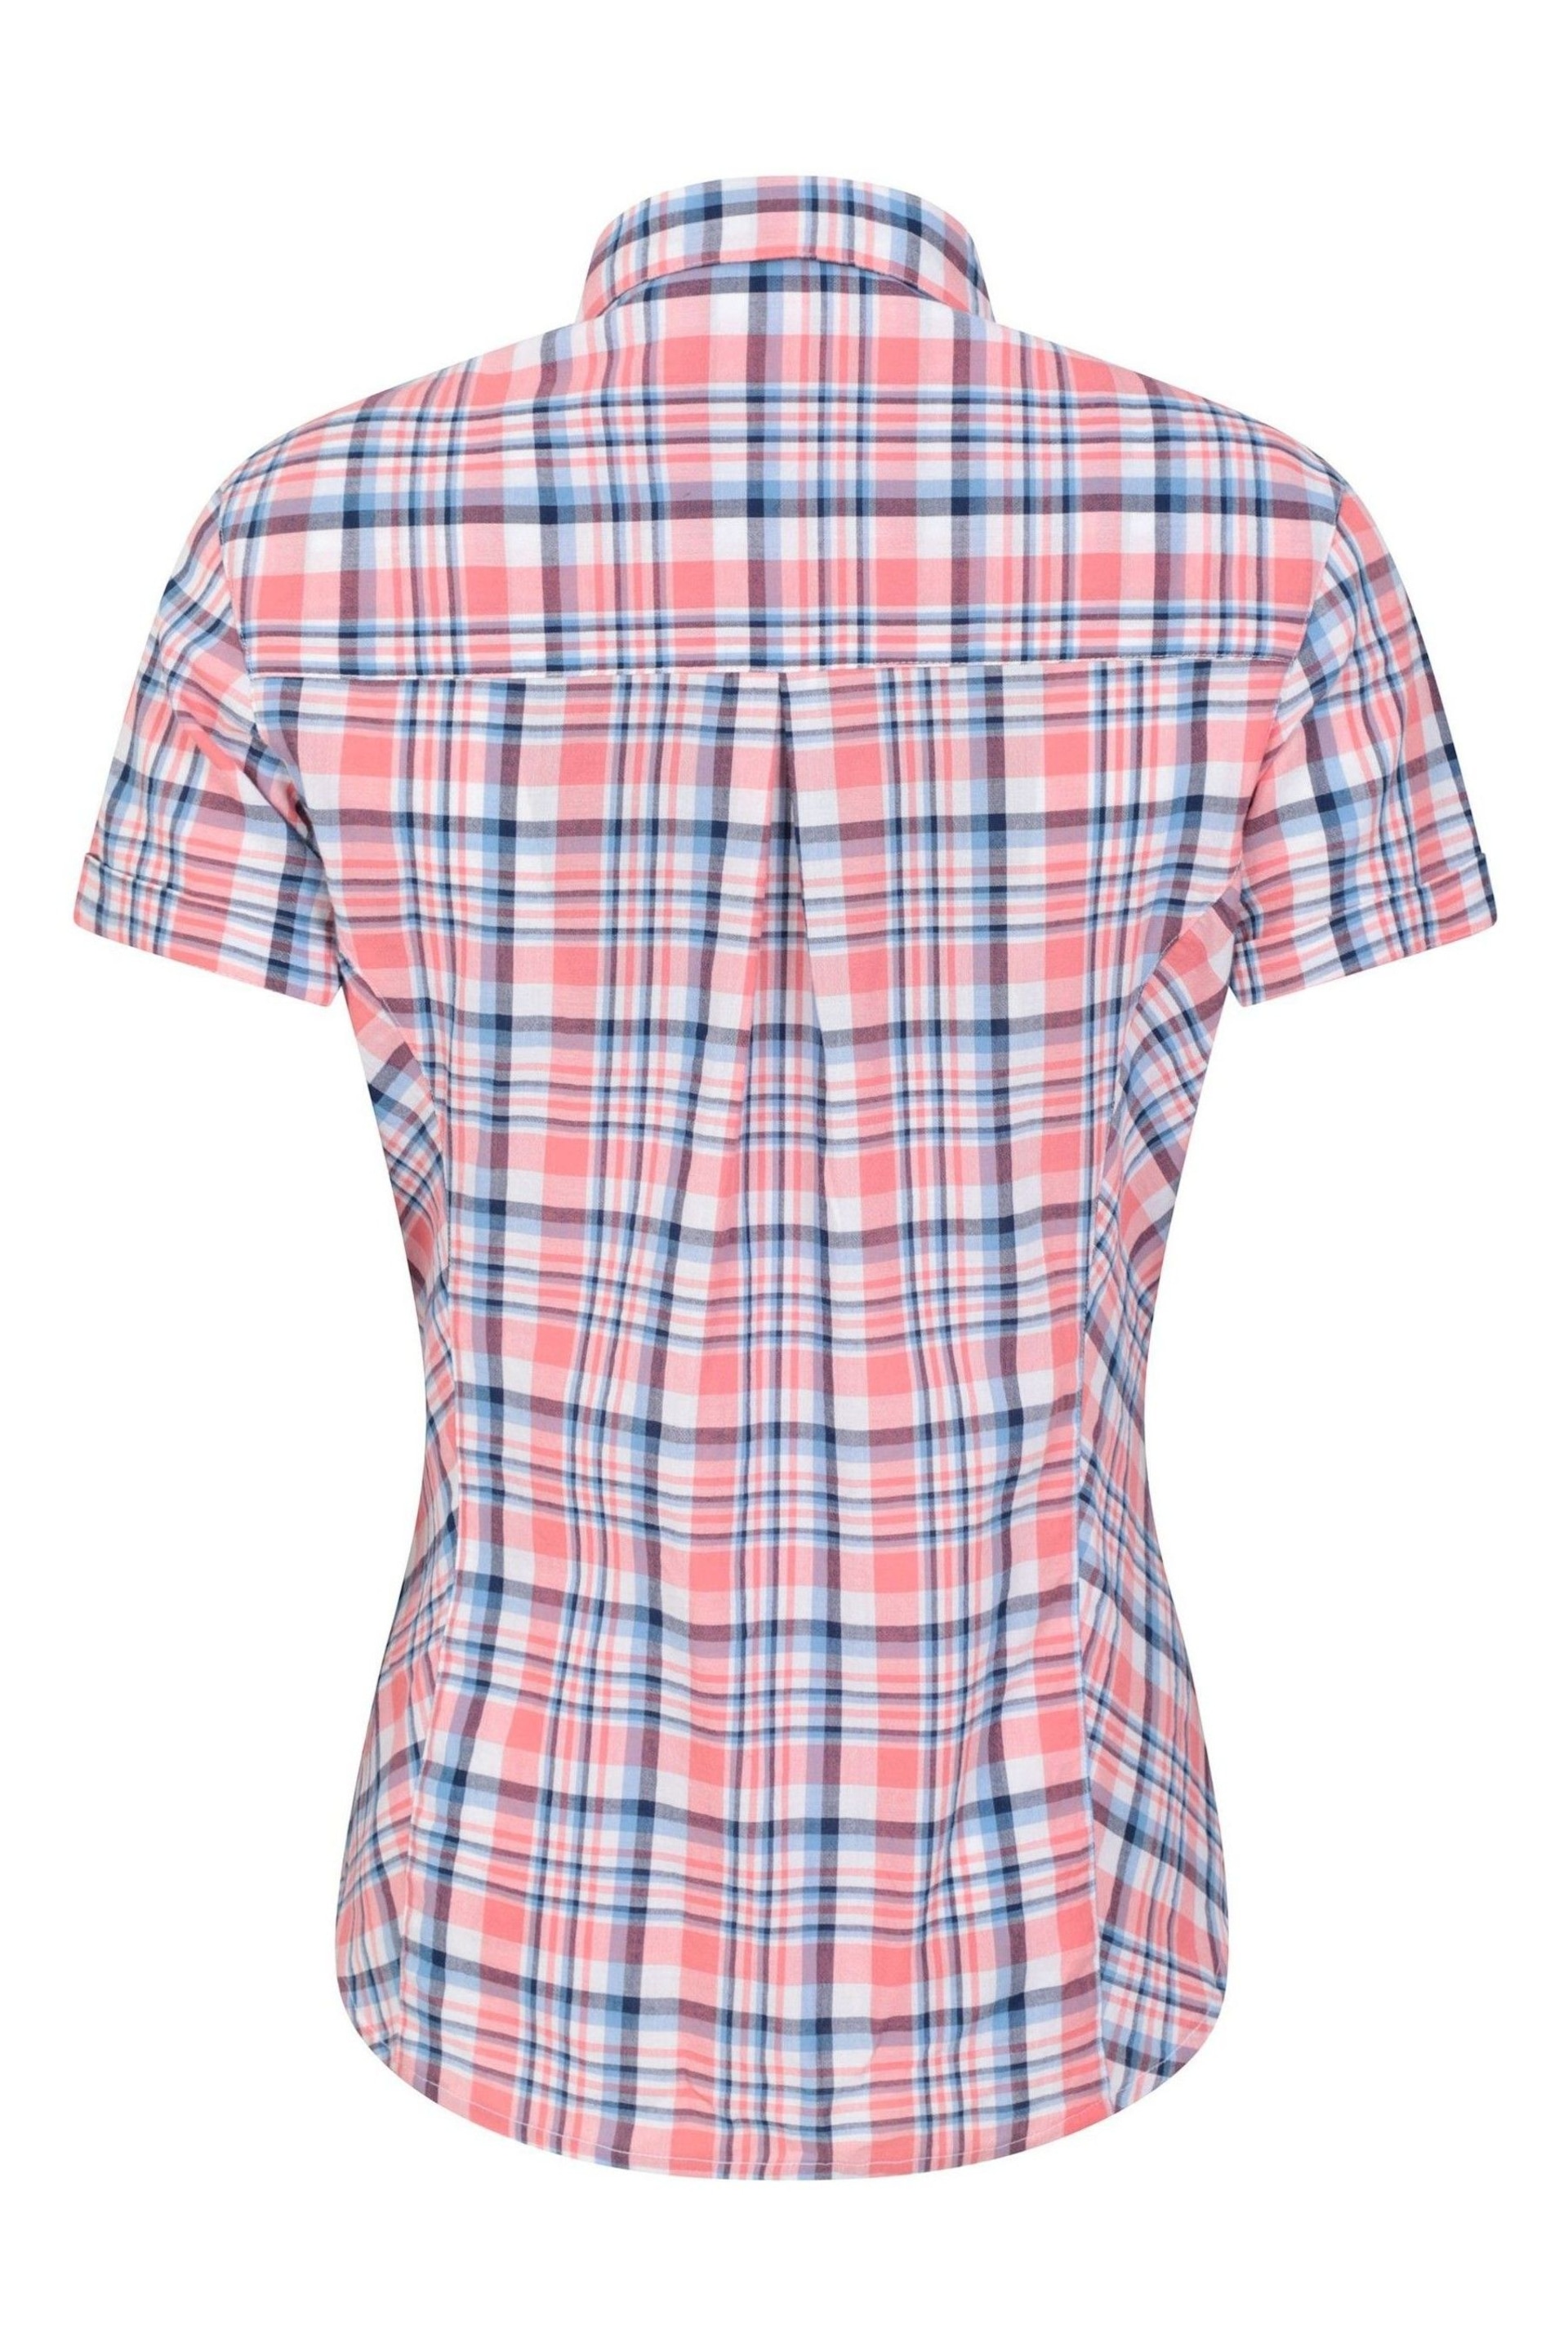 Mountain Warehouse Pink Holiday Cotton Shirt - Womens - Image 3 of 6